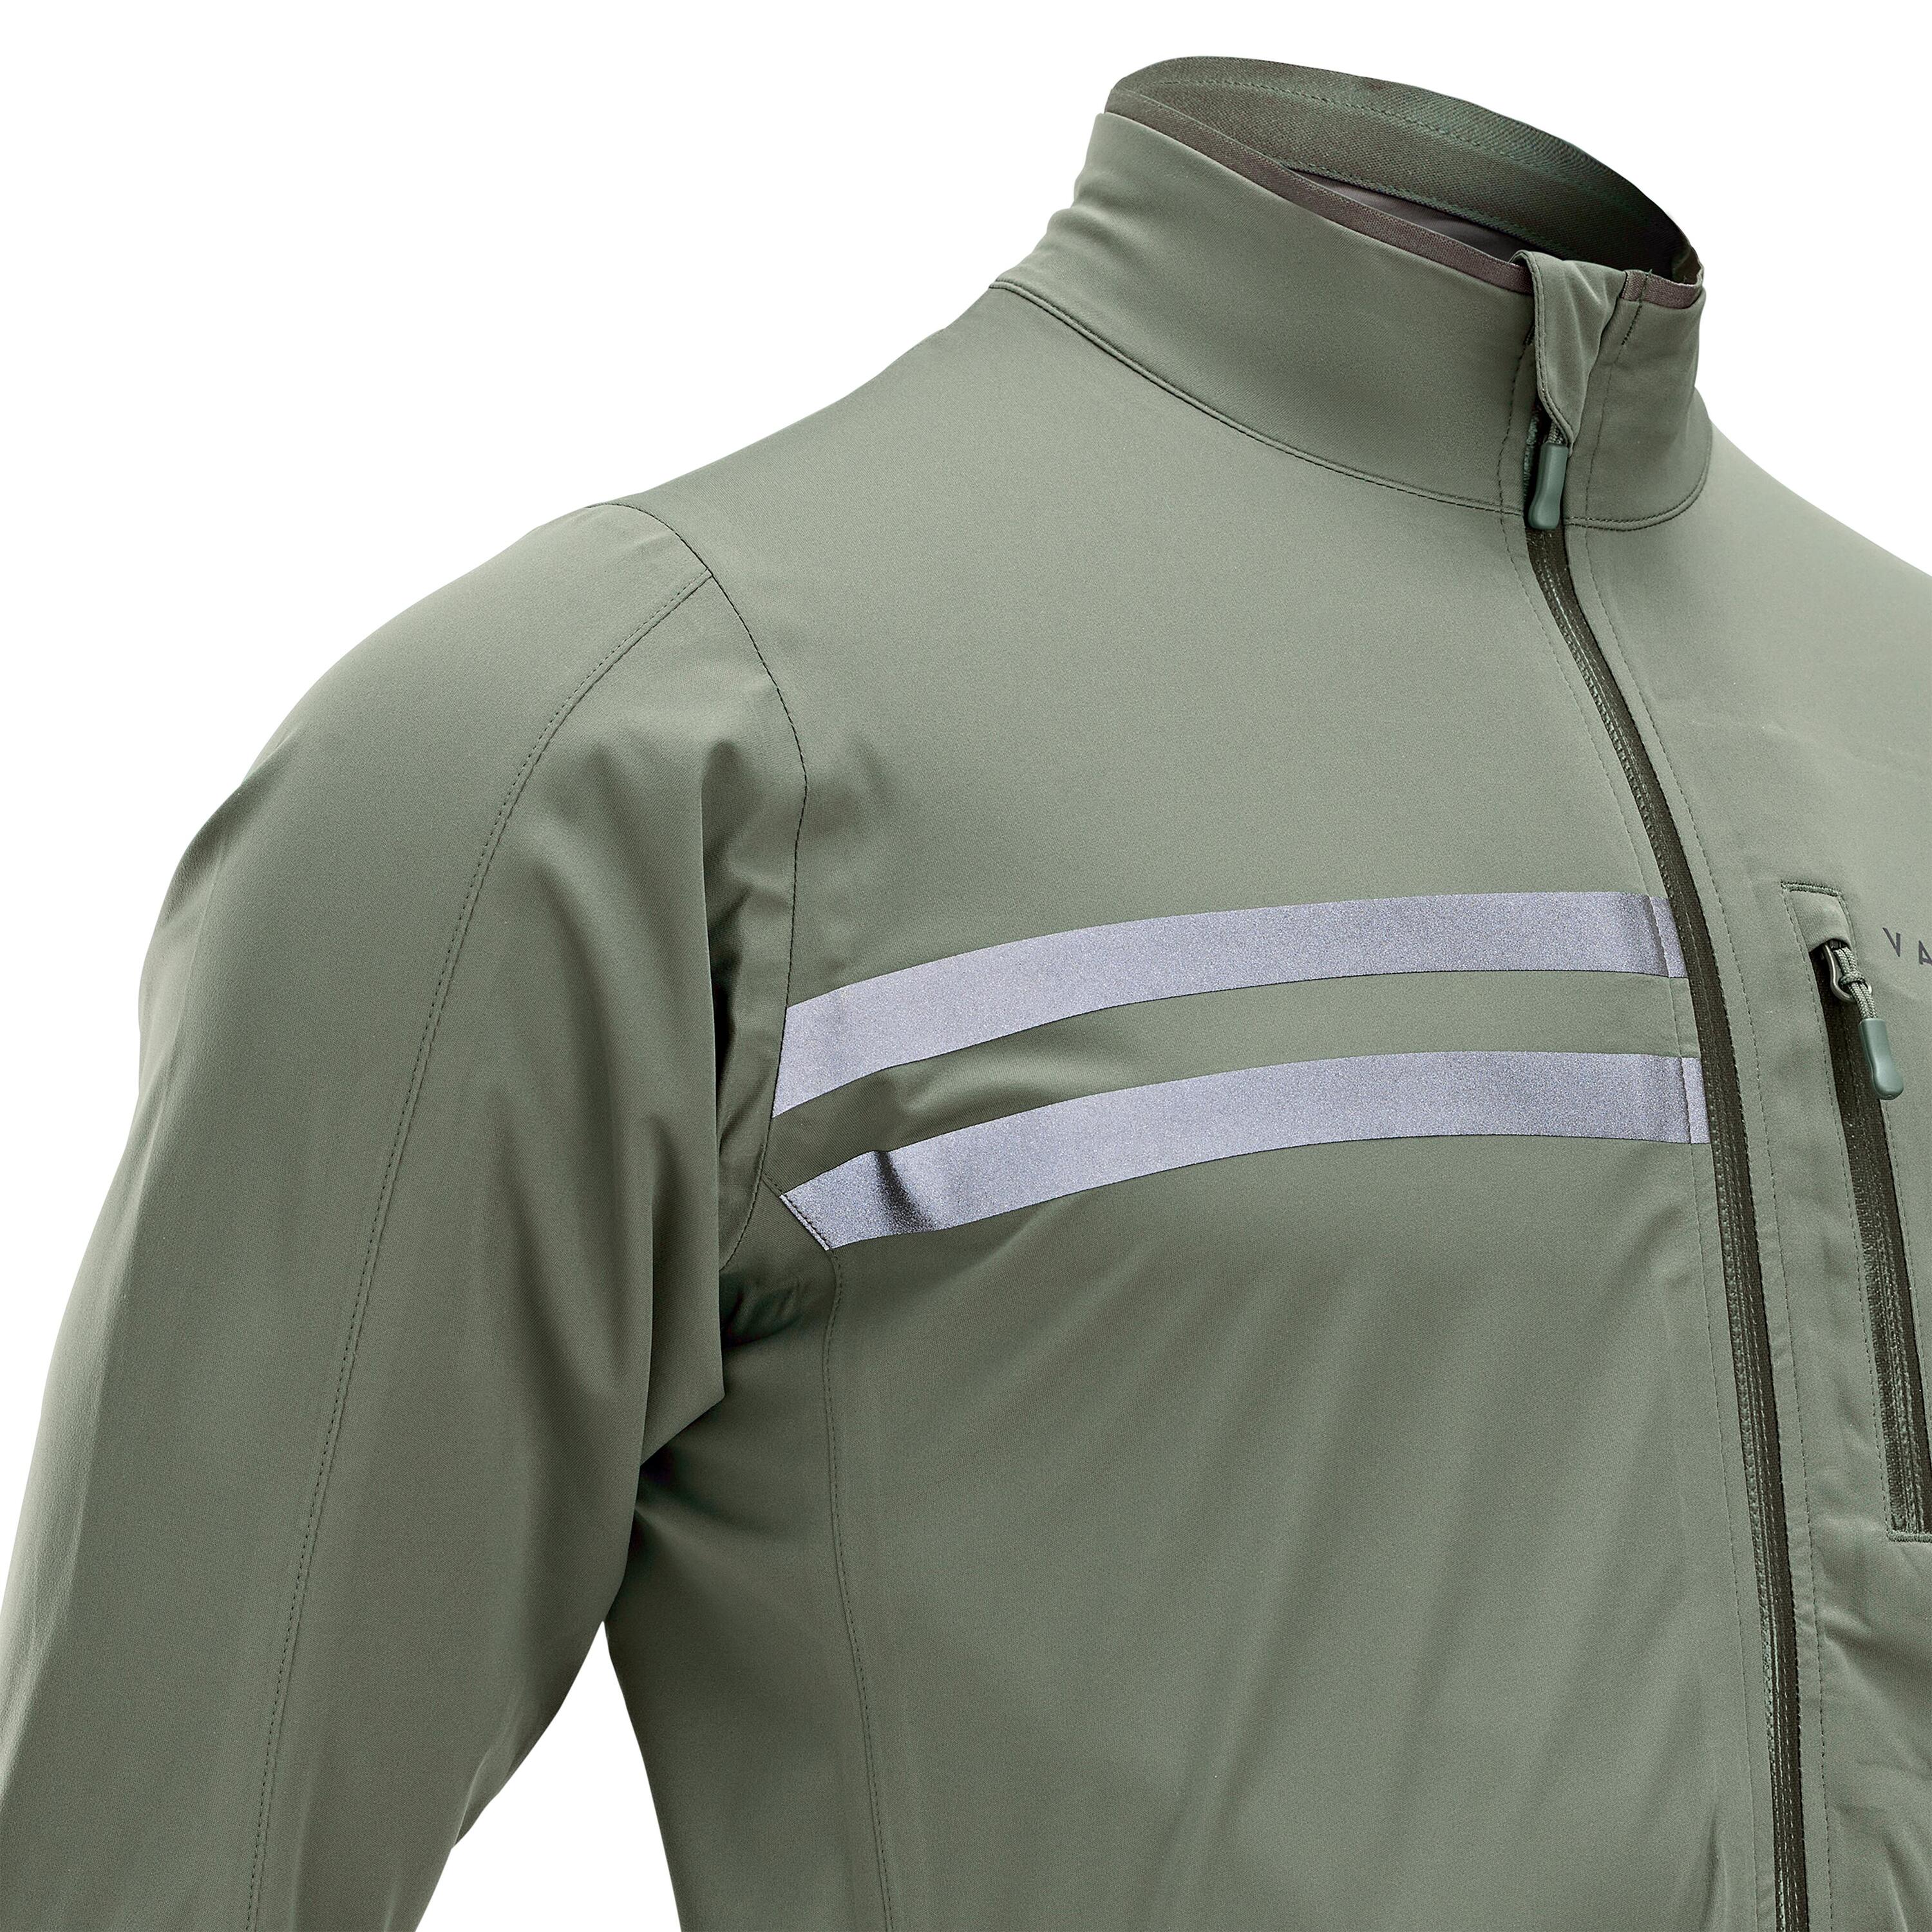 Men's Long-Sleeved Showerproof Road Cycling Jacket RC 500 - Khaki 5/8